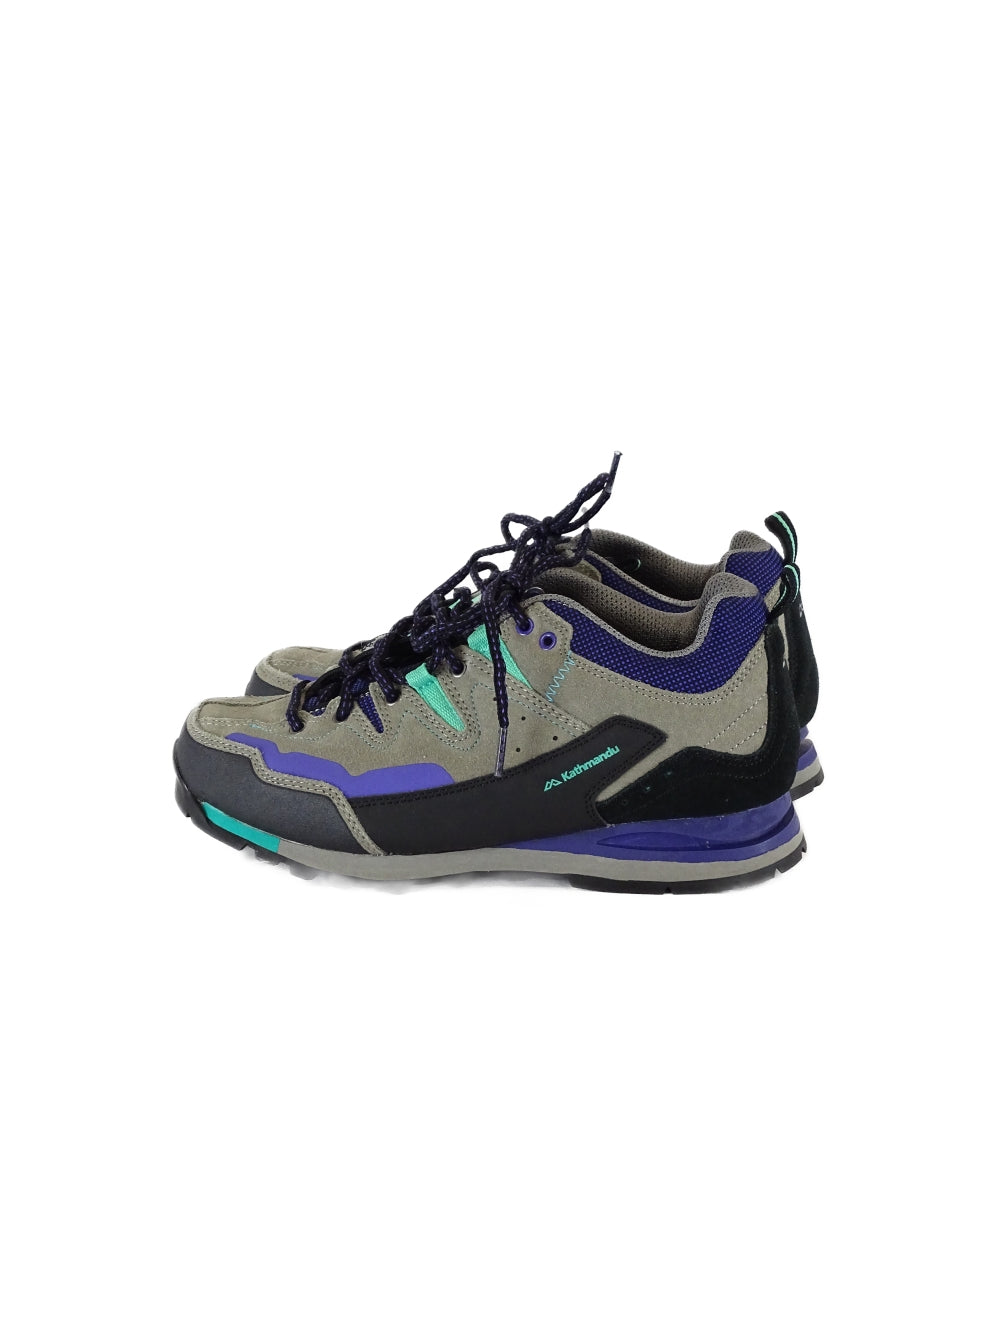 Kathmandu Grey, Purple and Green Short Hiking Boots 41